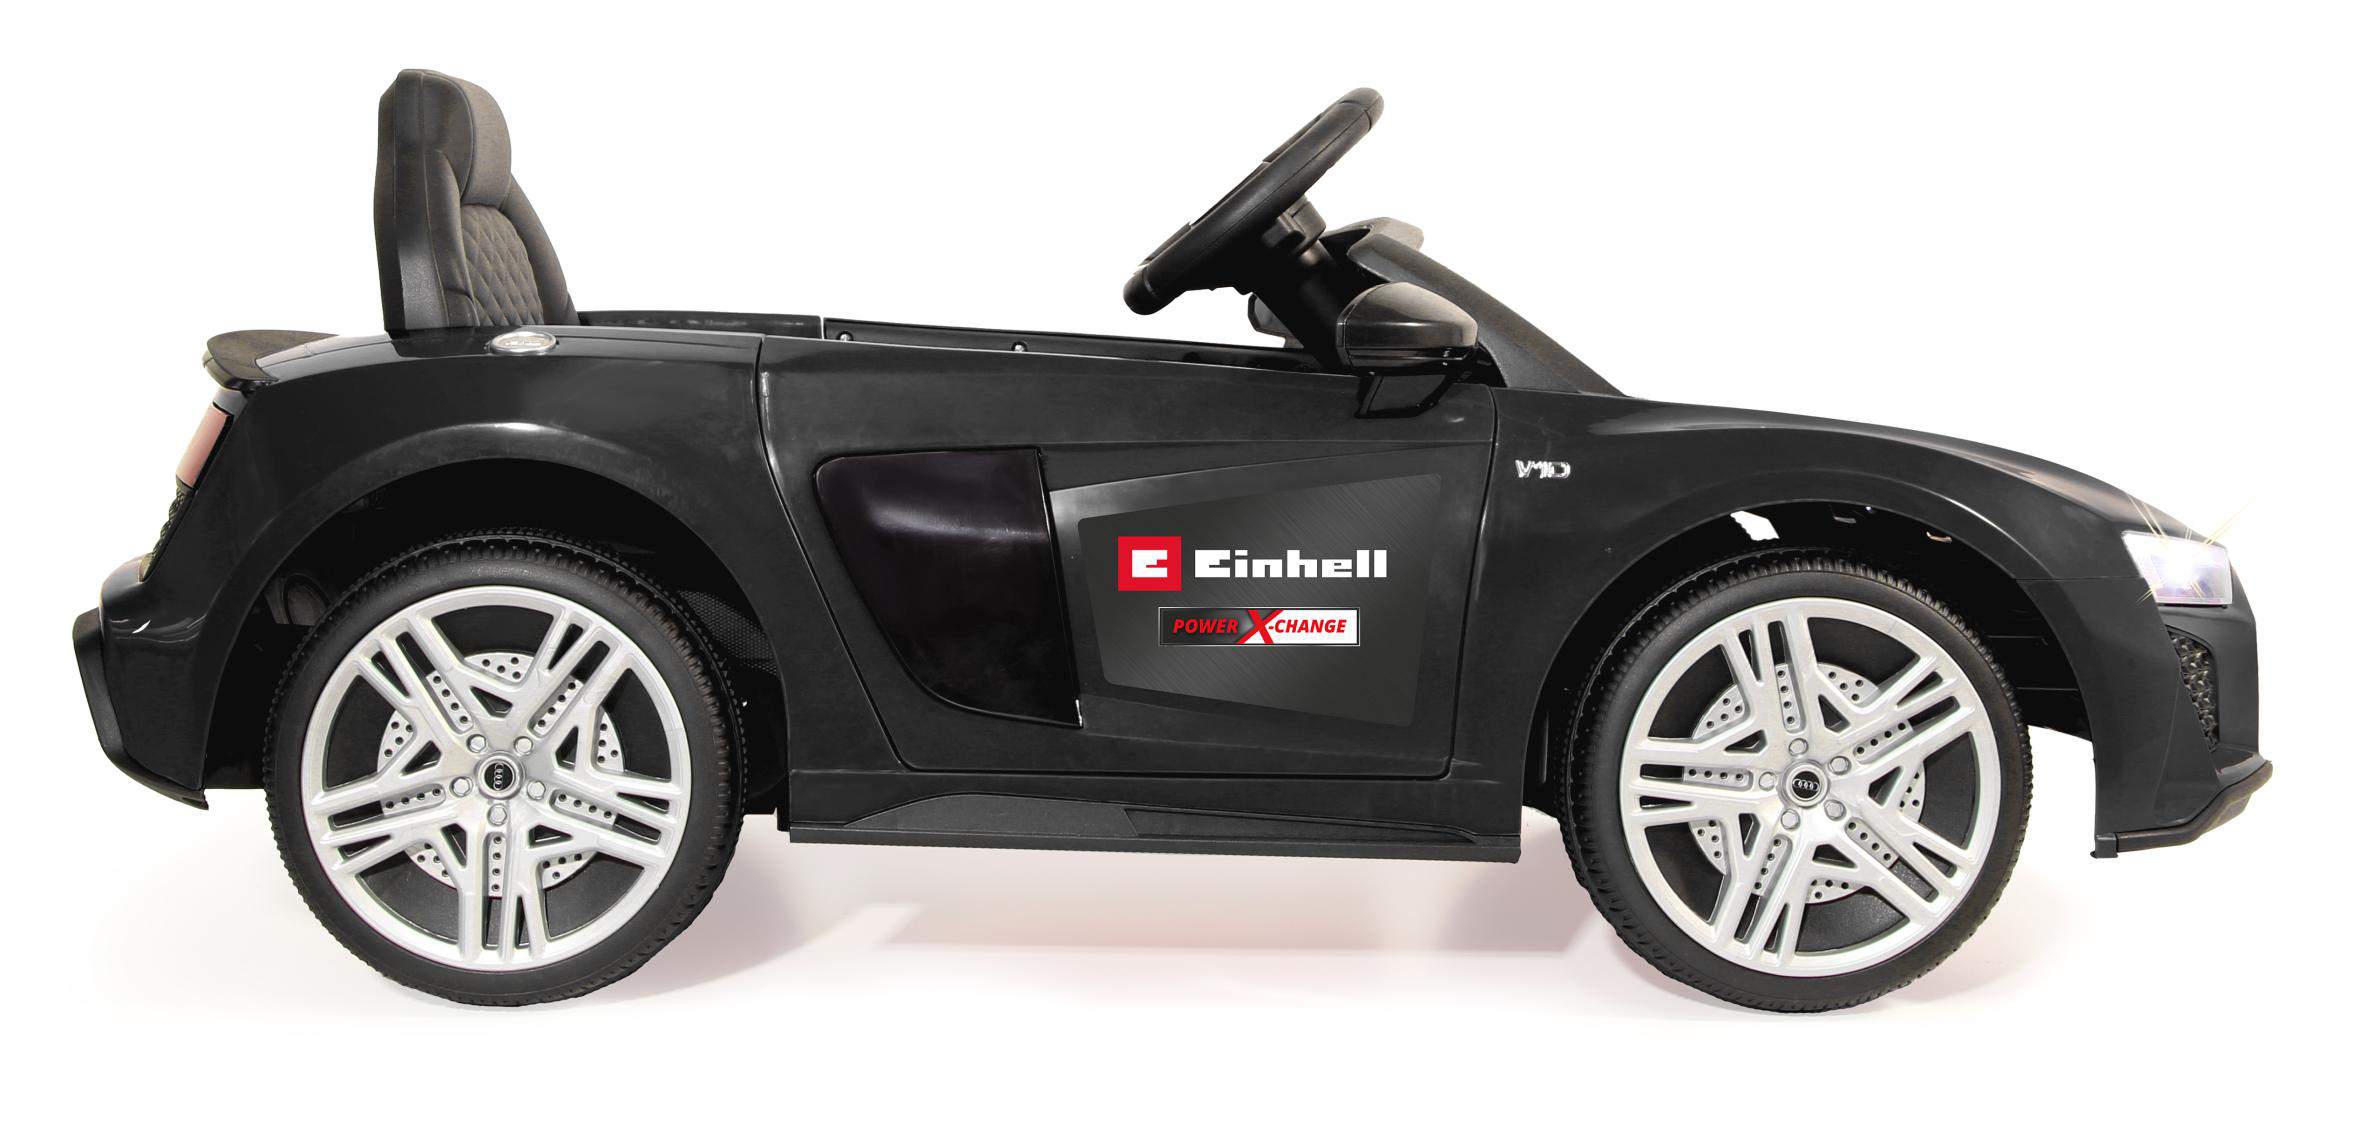 KIDS 18V schwarz R8 X-Change Einhell inkl. Audi Elektrofahrzeug Ride-on Power Starter Schwarz JAMARA Set Spyder